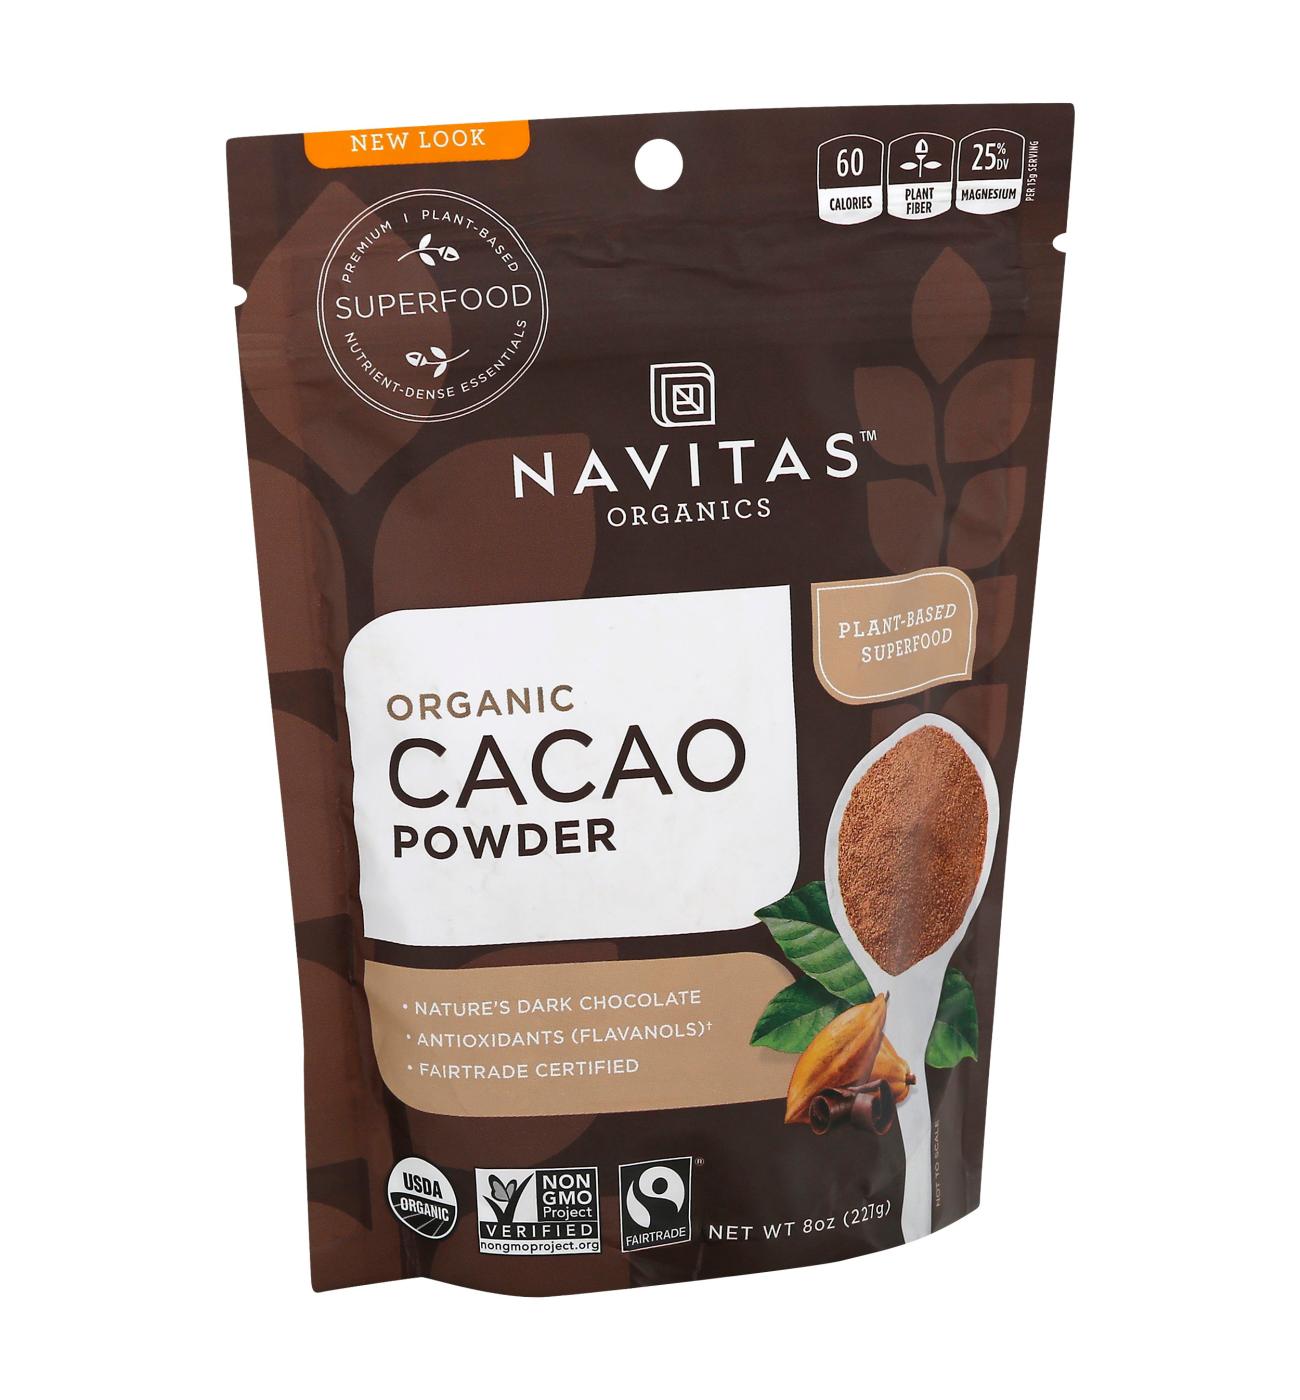 Navitas Organics Cacao Powder; image 1 of 2